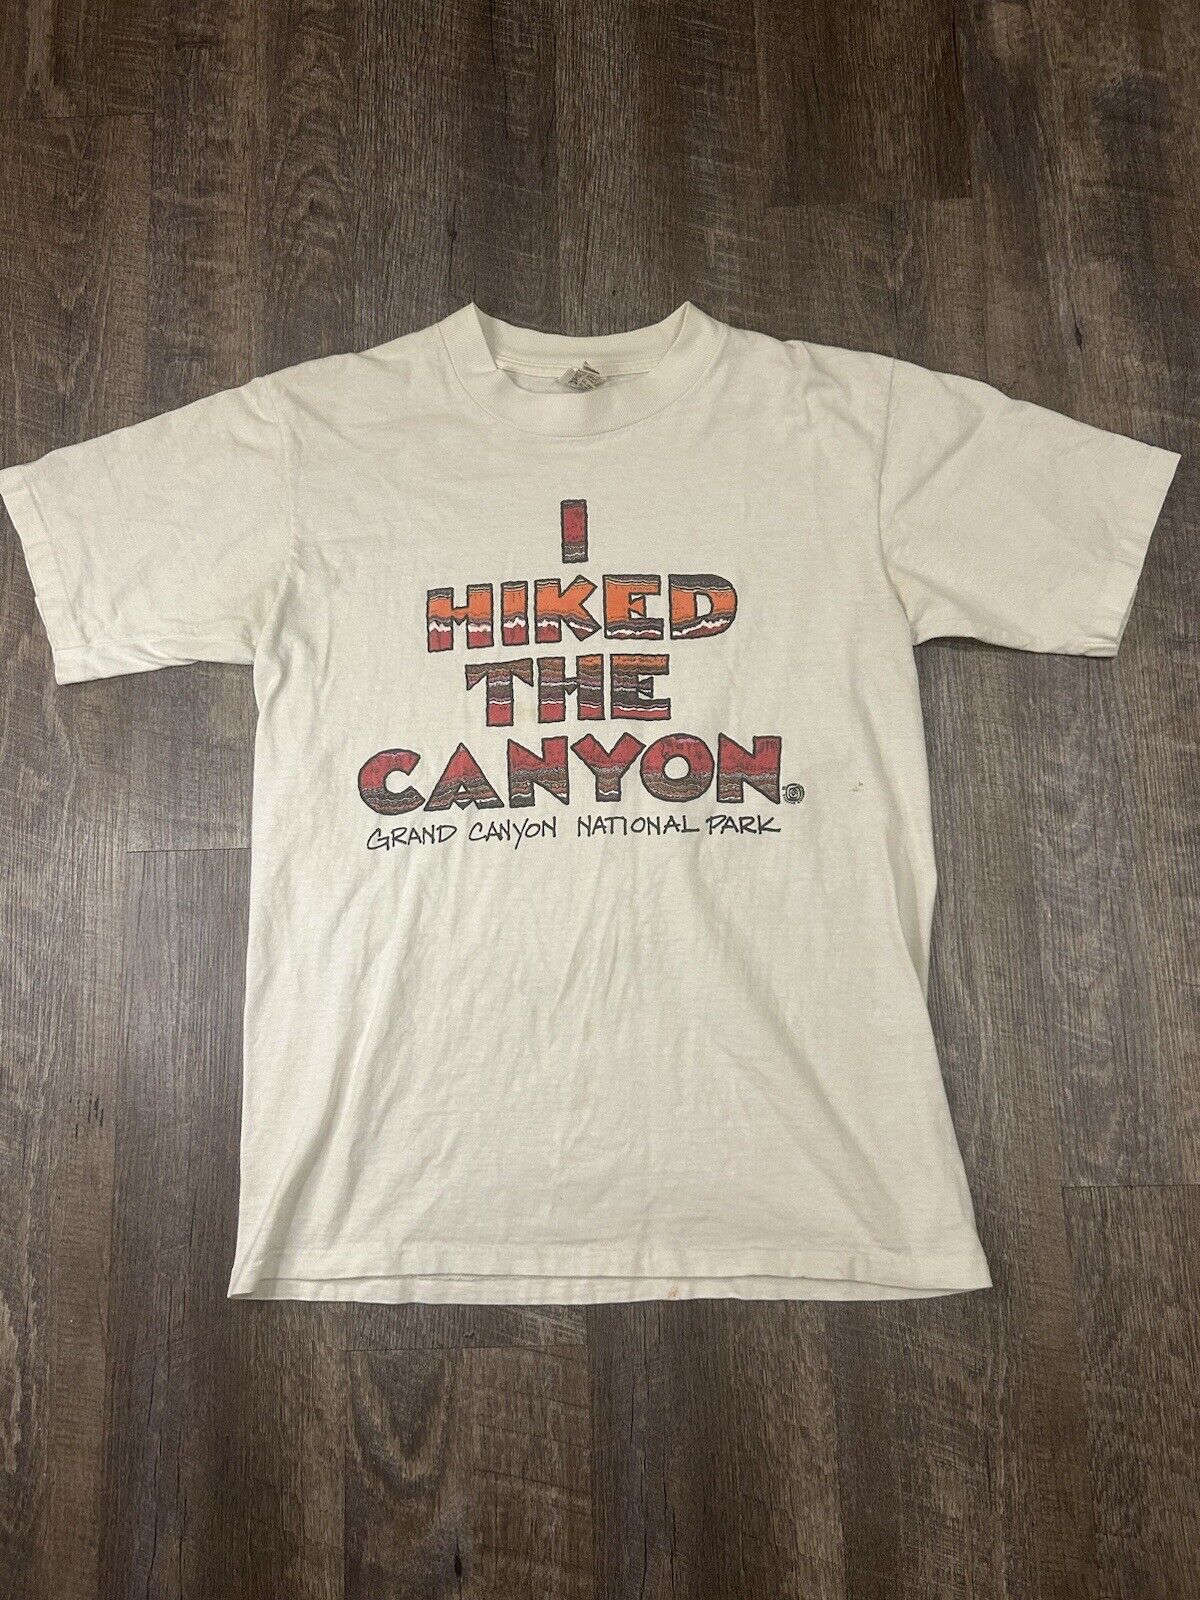 Grand Canyon National Park Vintage 90's single stitched  Sz Large  T-Shirt